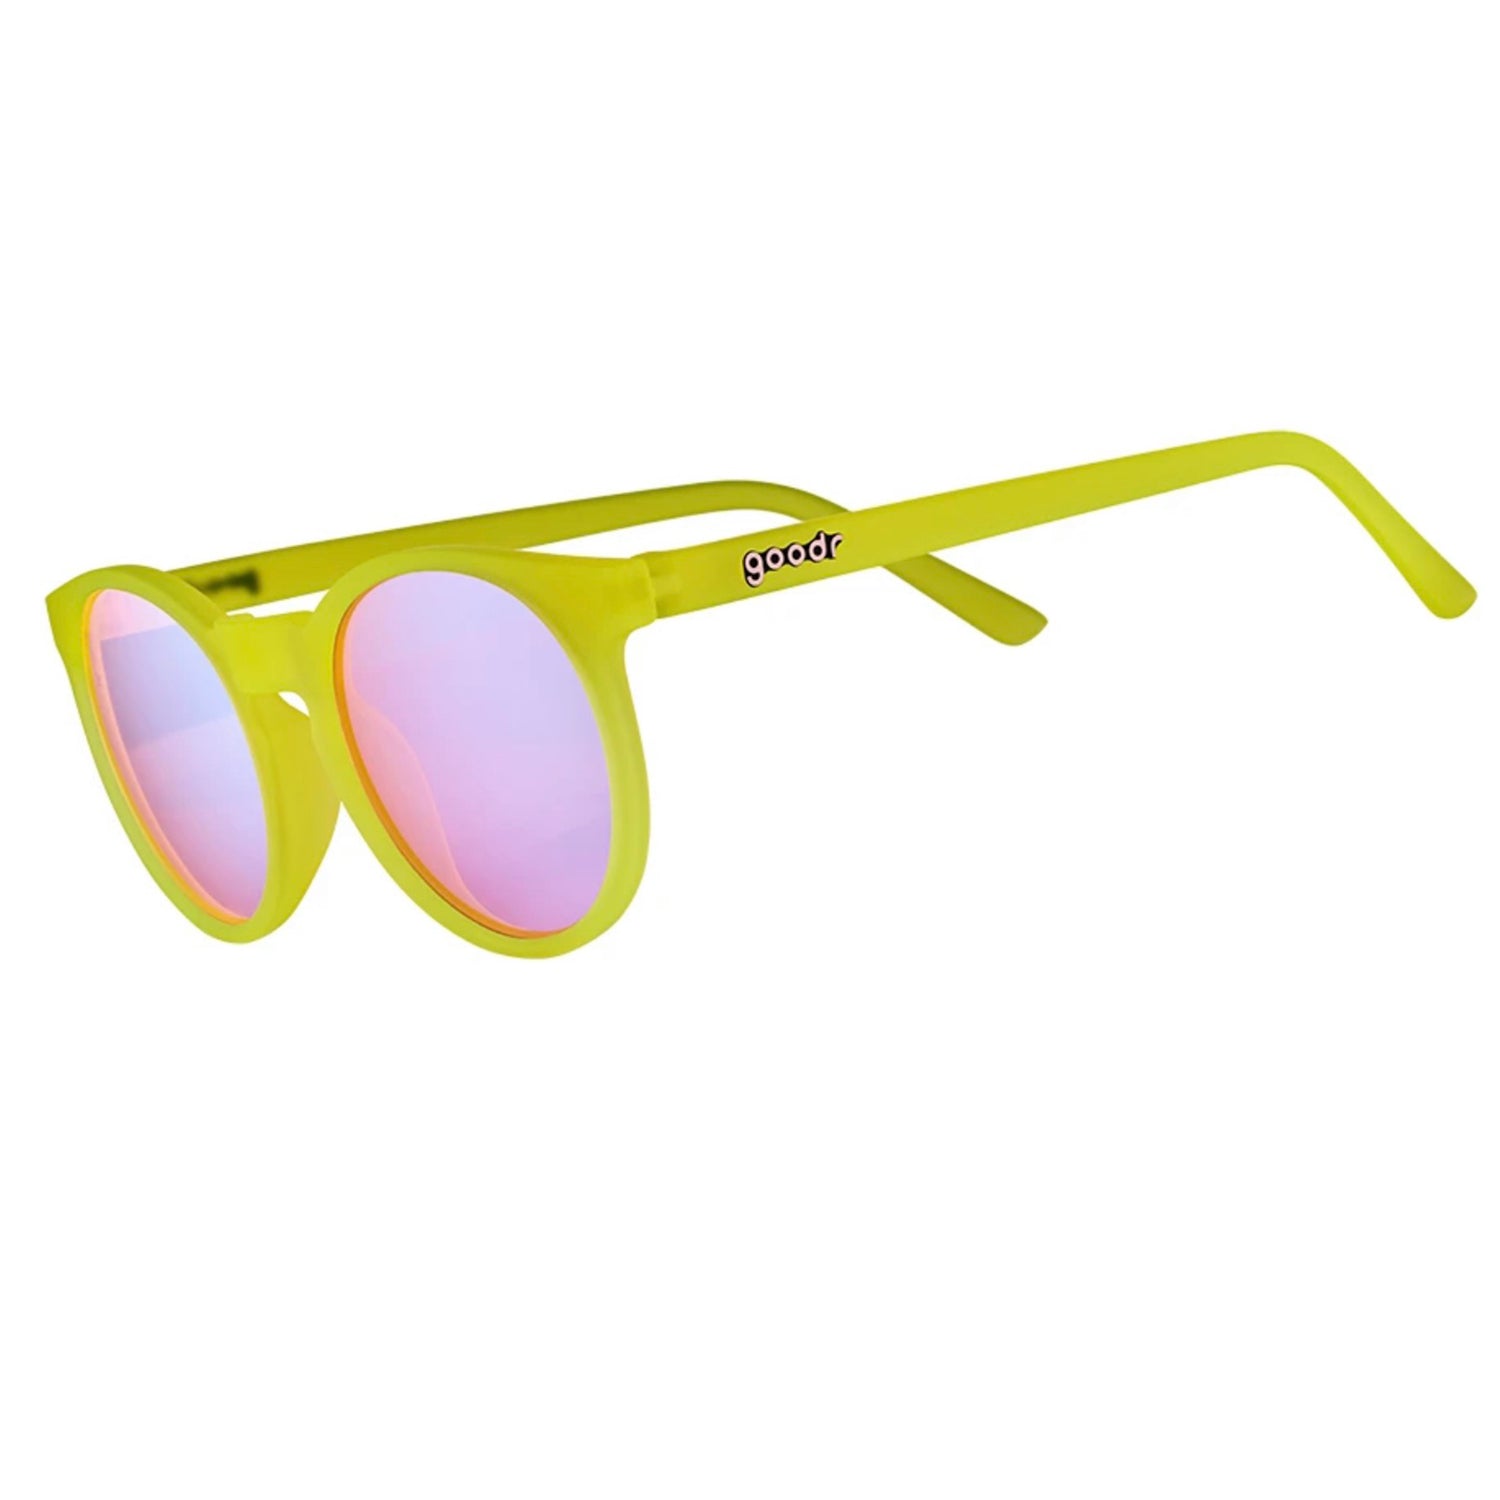 Goodr Sunglasses - Fade-Er-Ade Shades